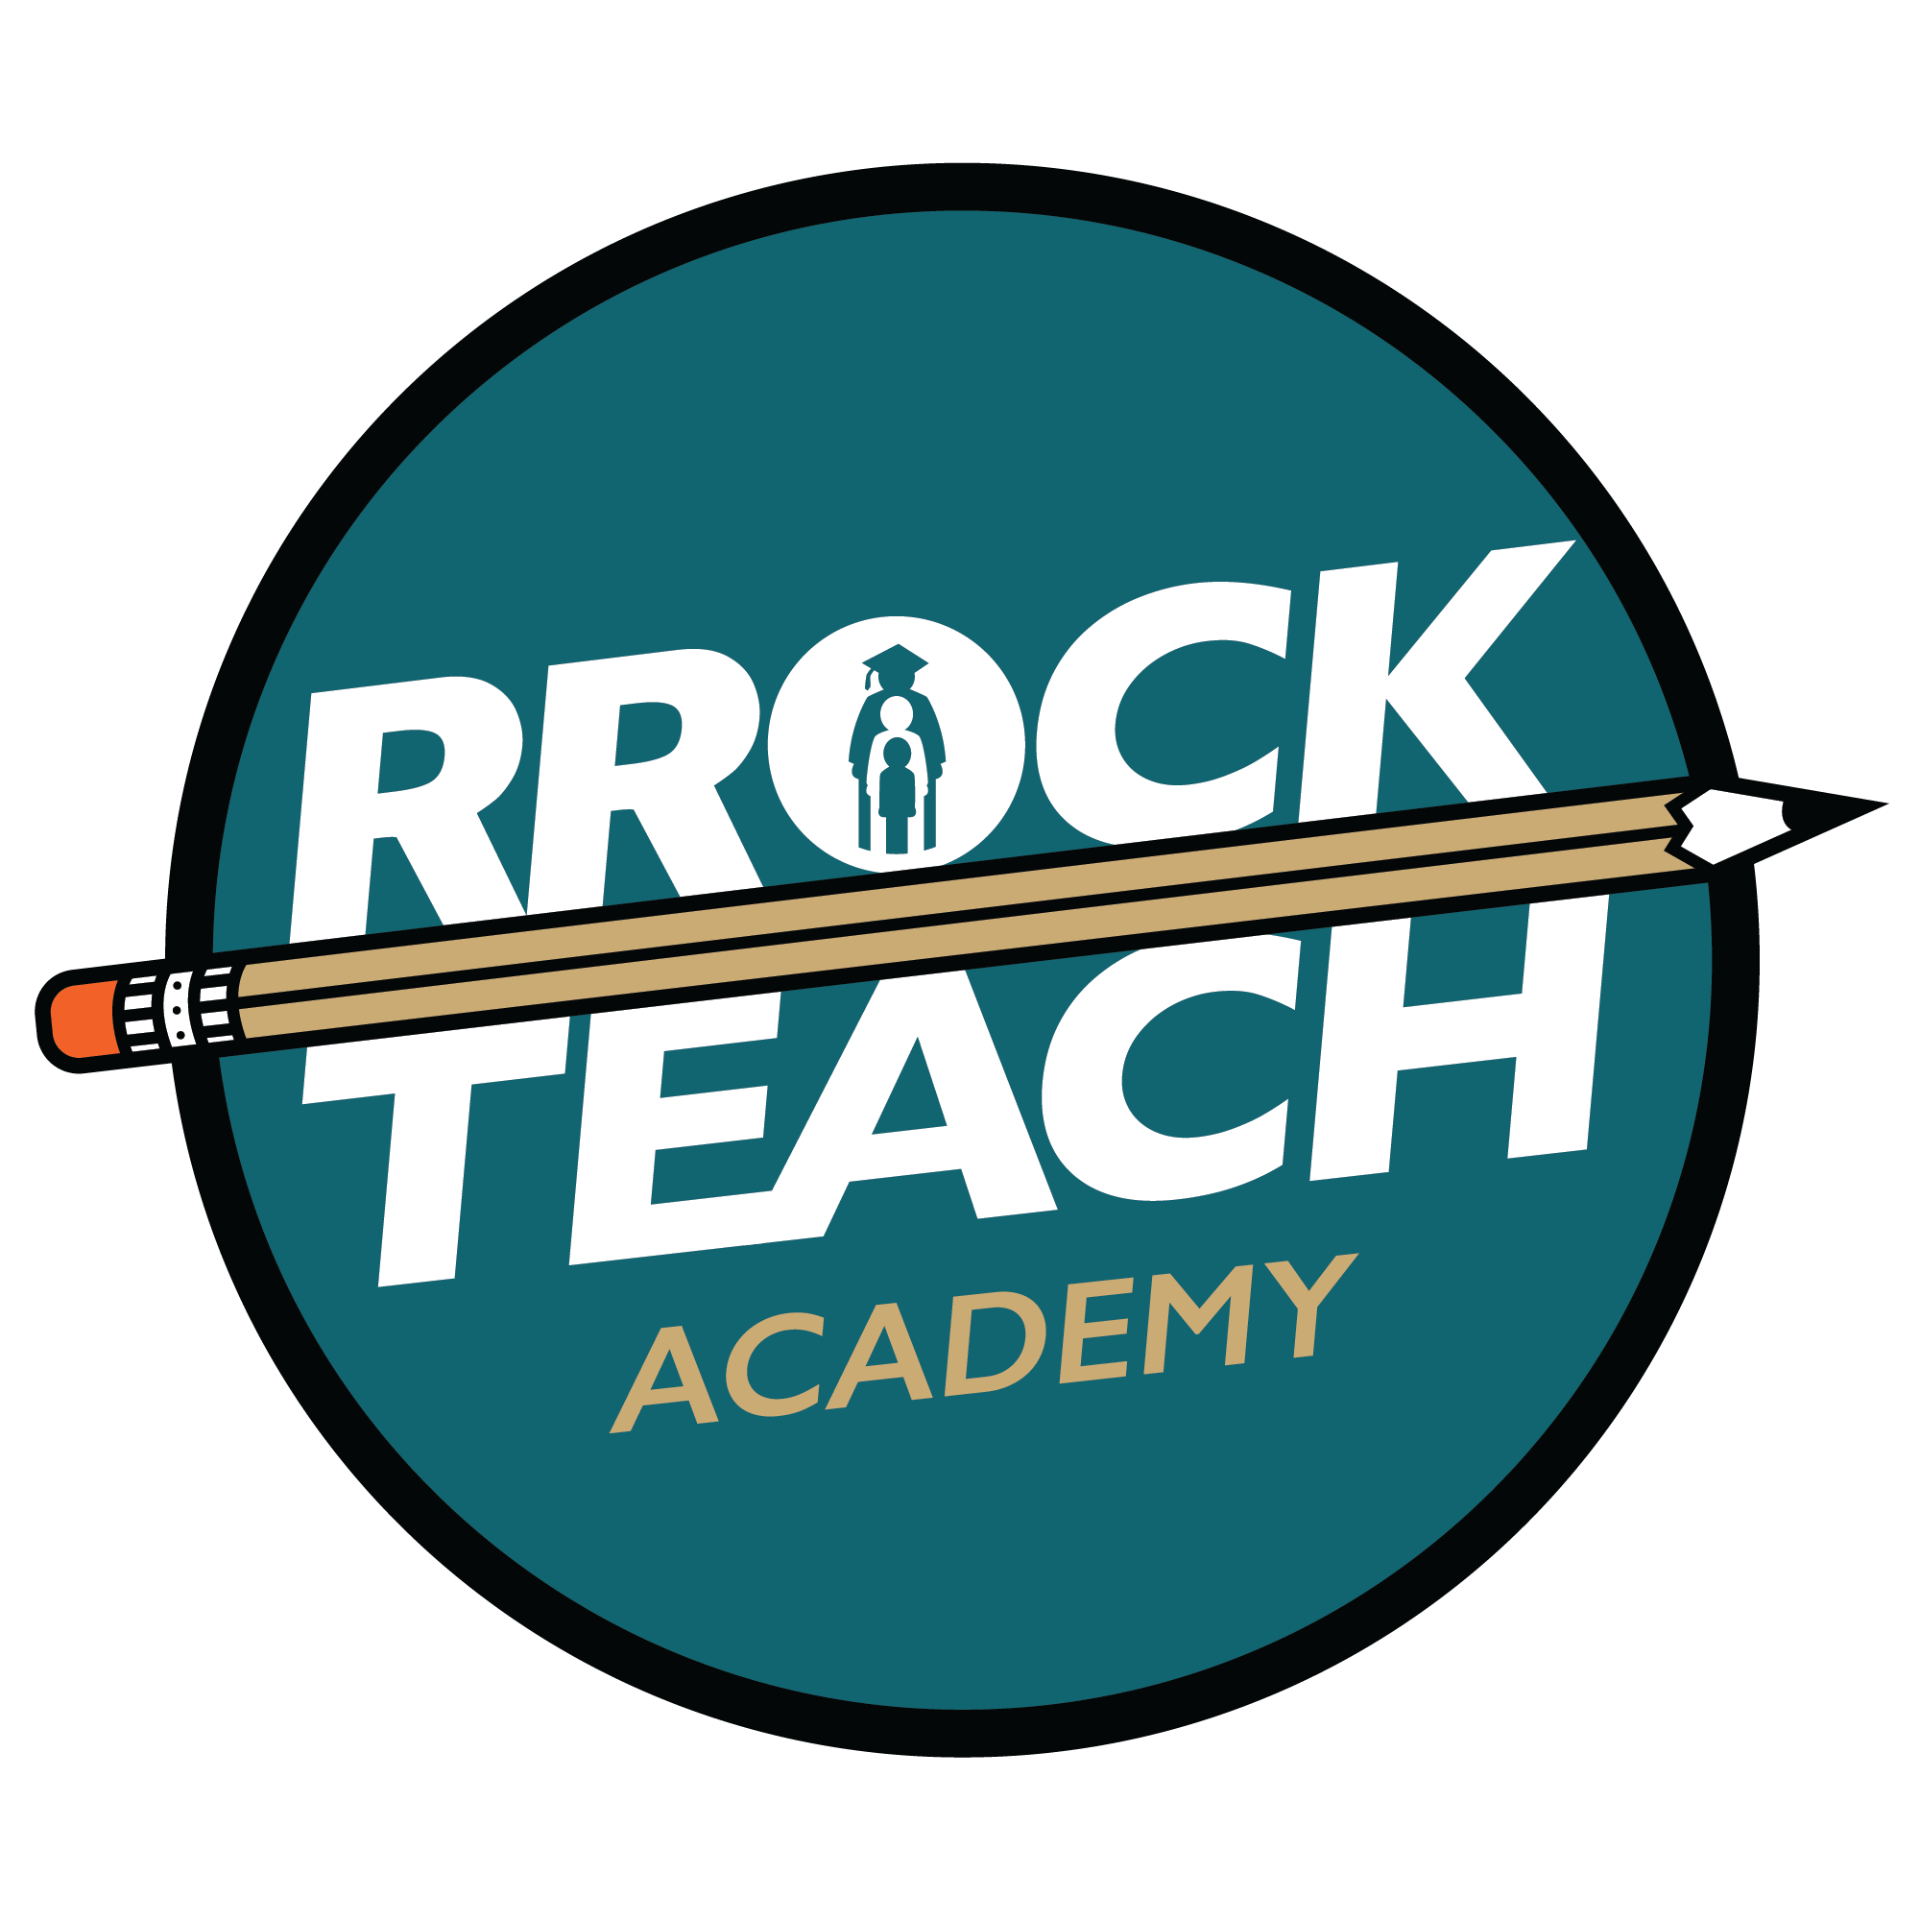 Image is the Round Rock Teach Academy logo, a circle with a pencil through it that says R.R.O.C.K. Teach.